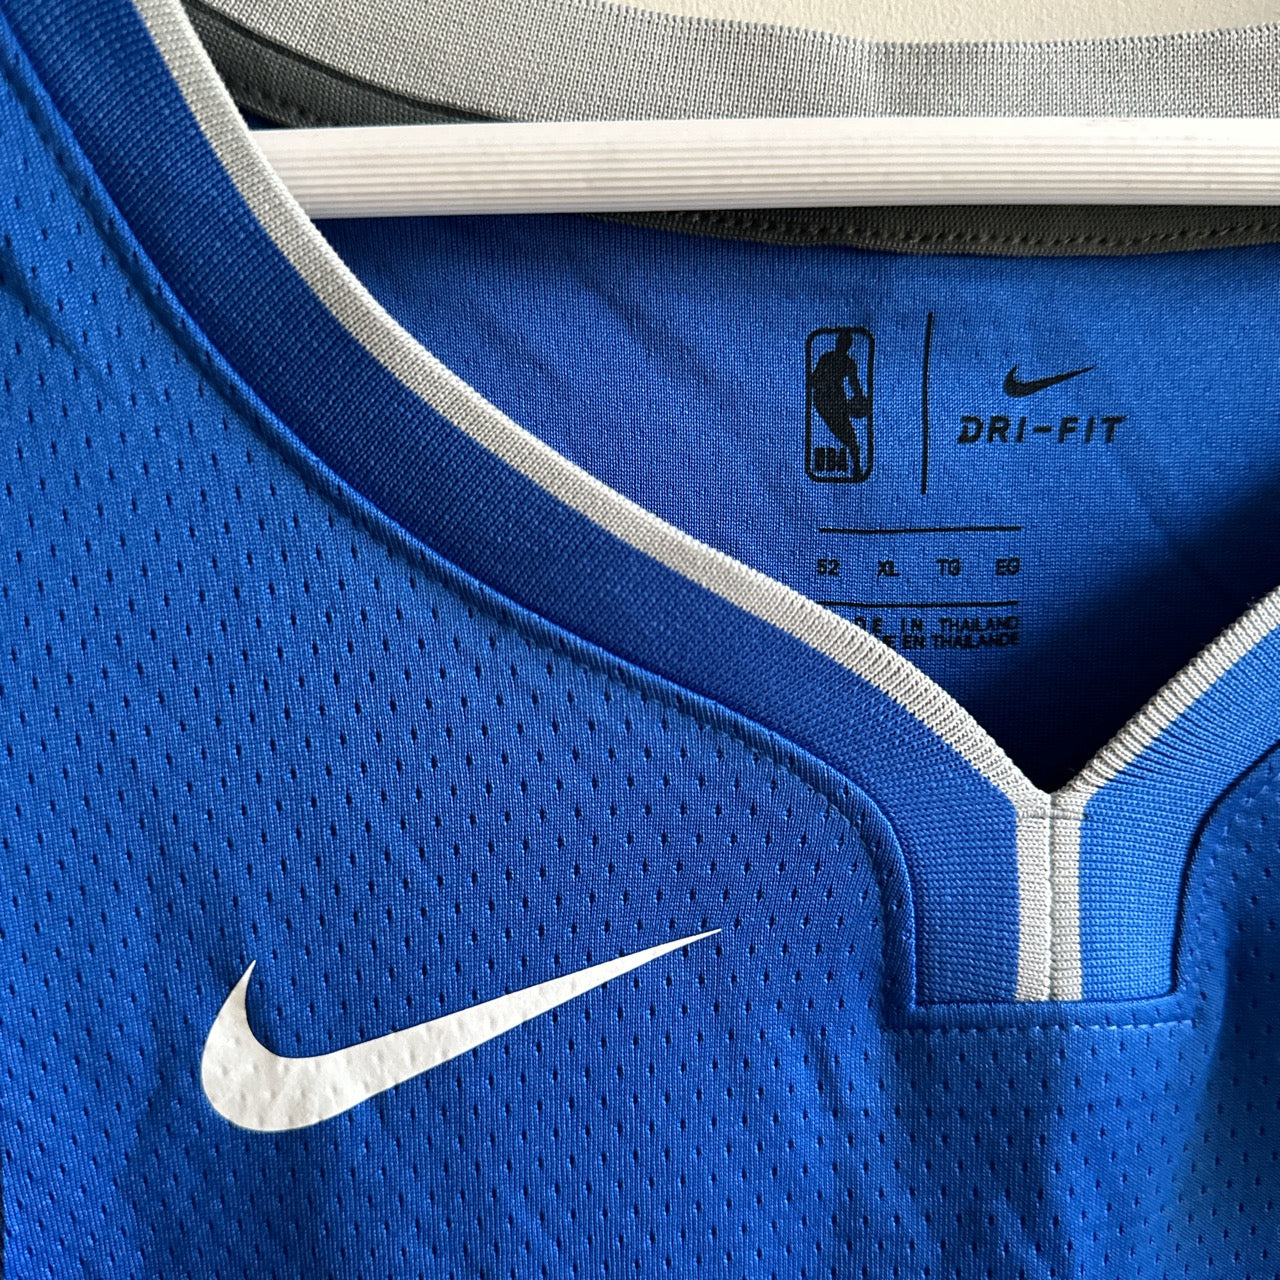 Dallas Mavericks Kyrie Irving Nike jersey - XL